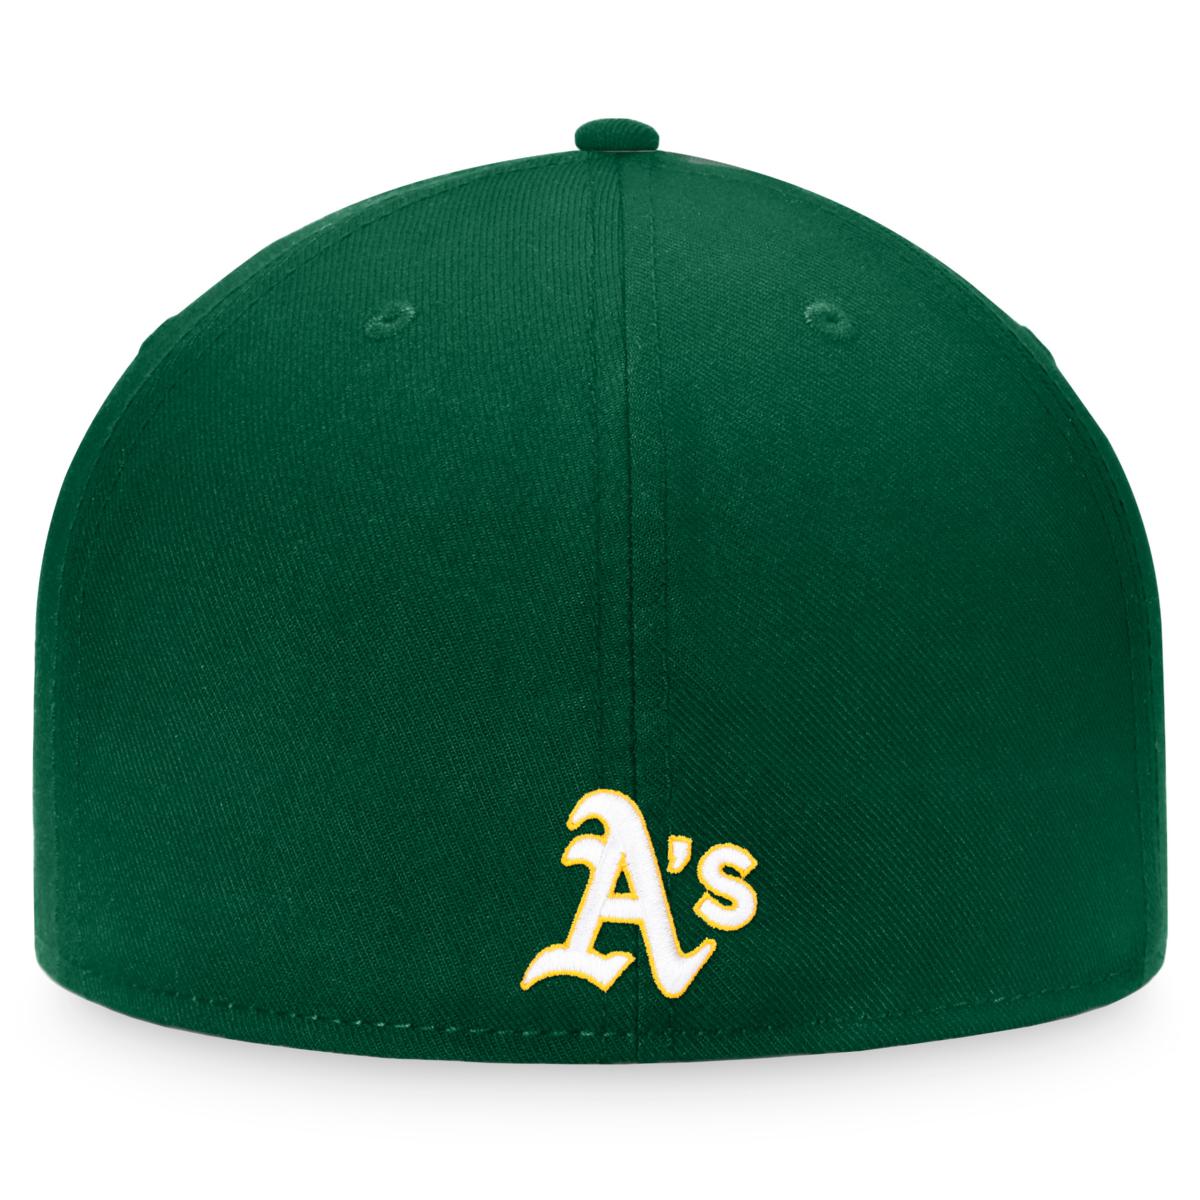 MLB Men's Hat - Green